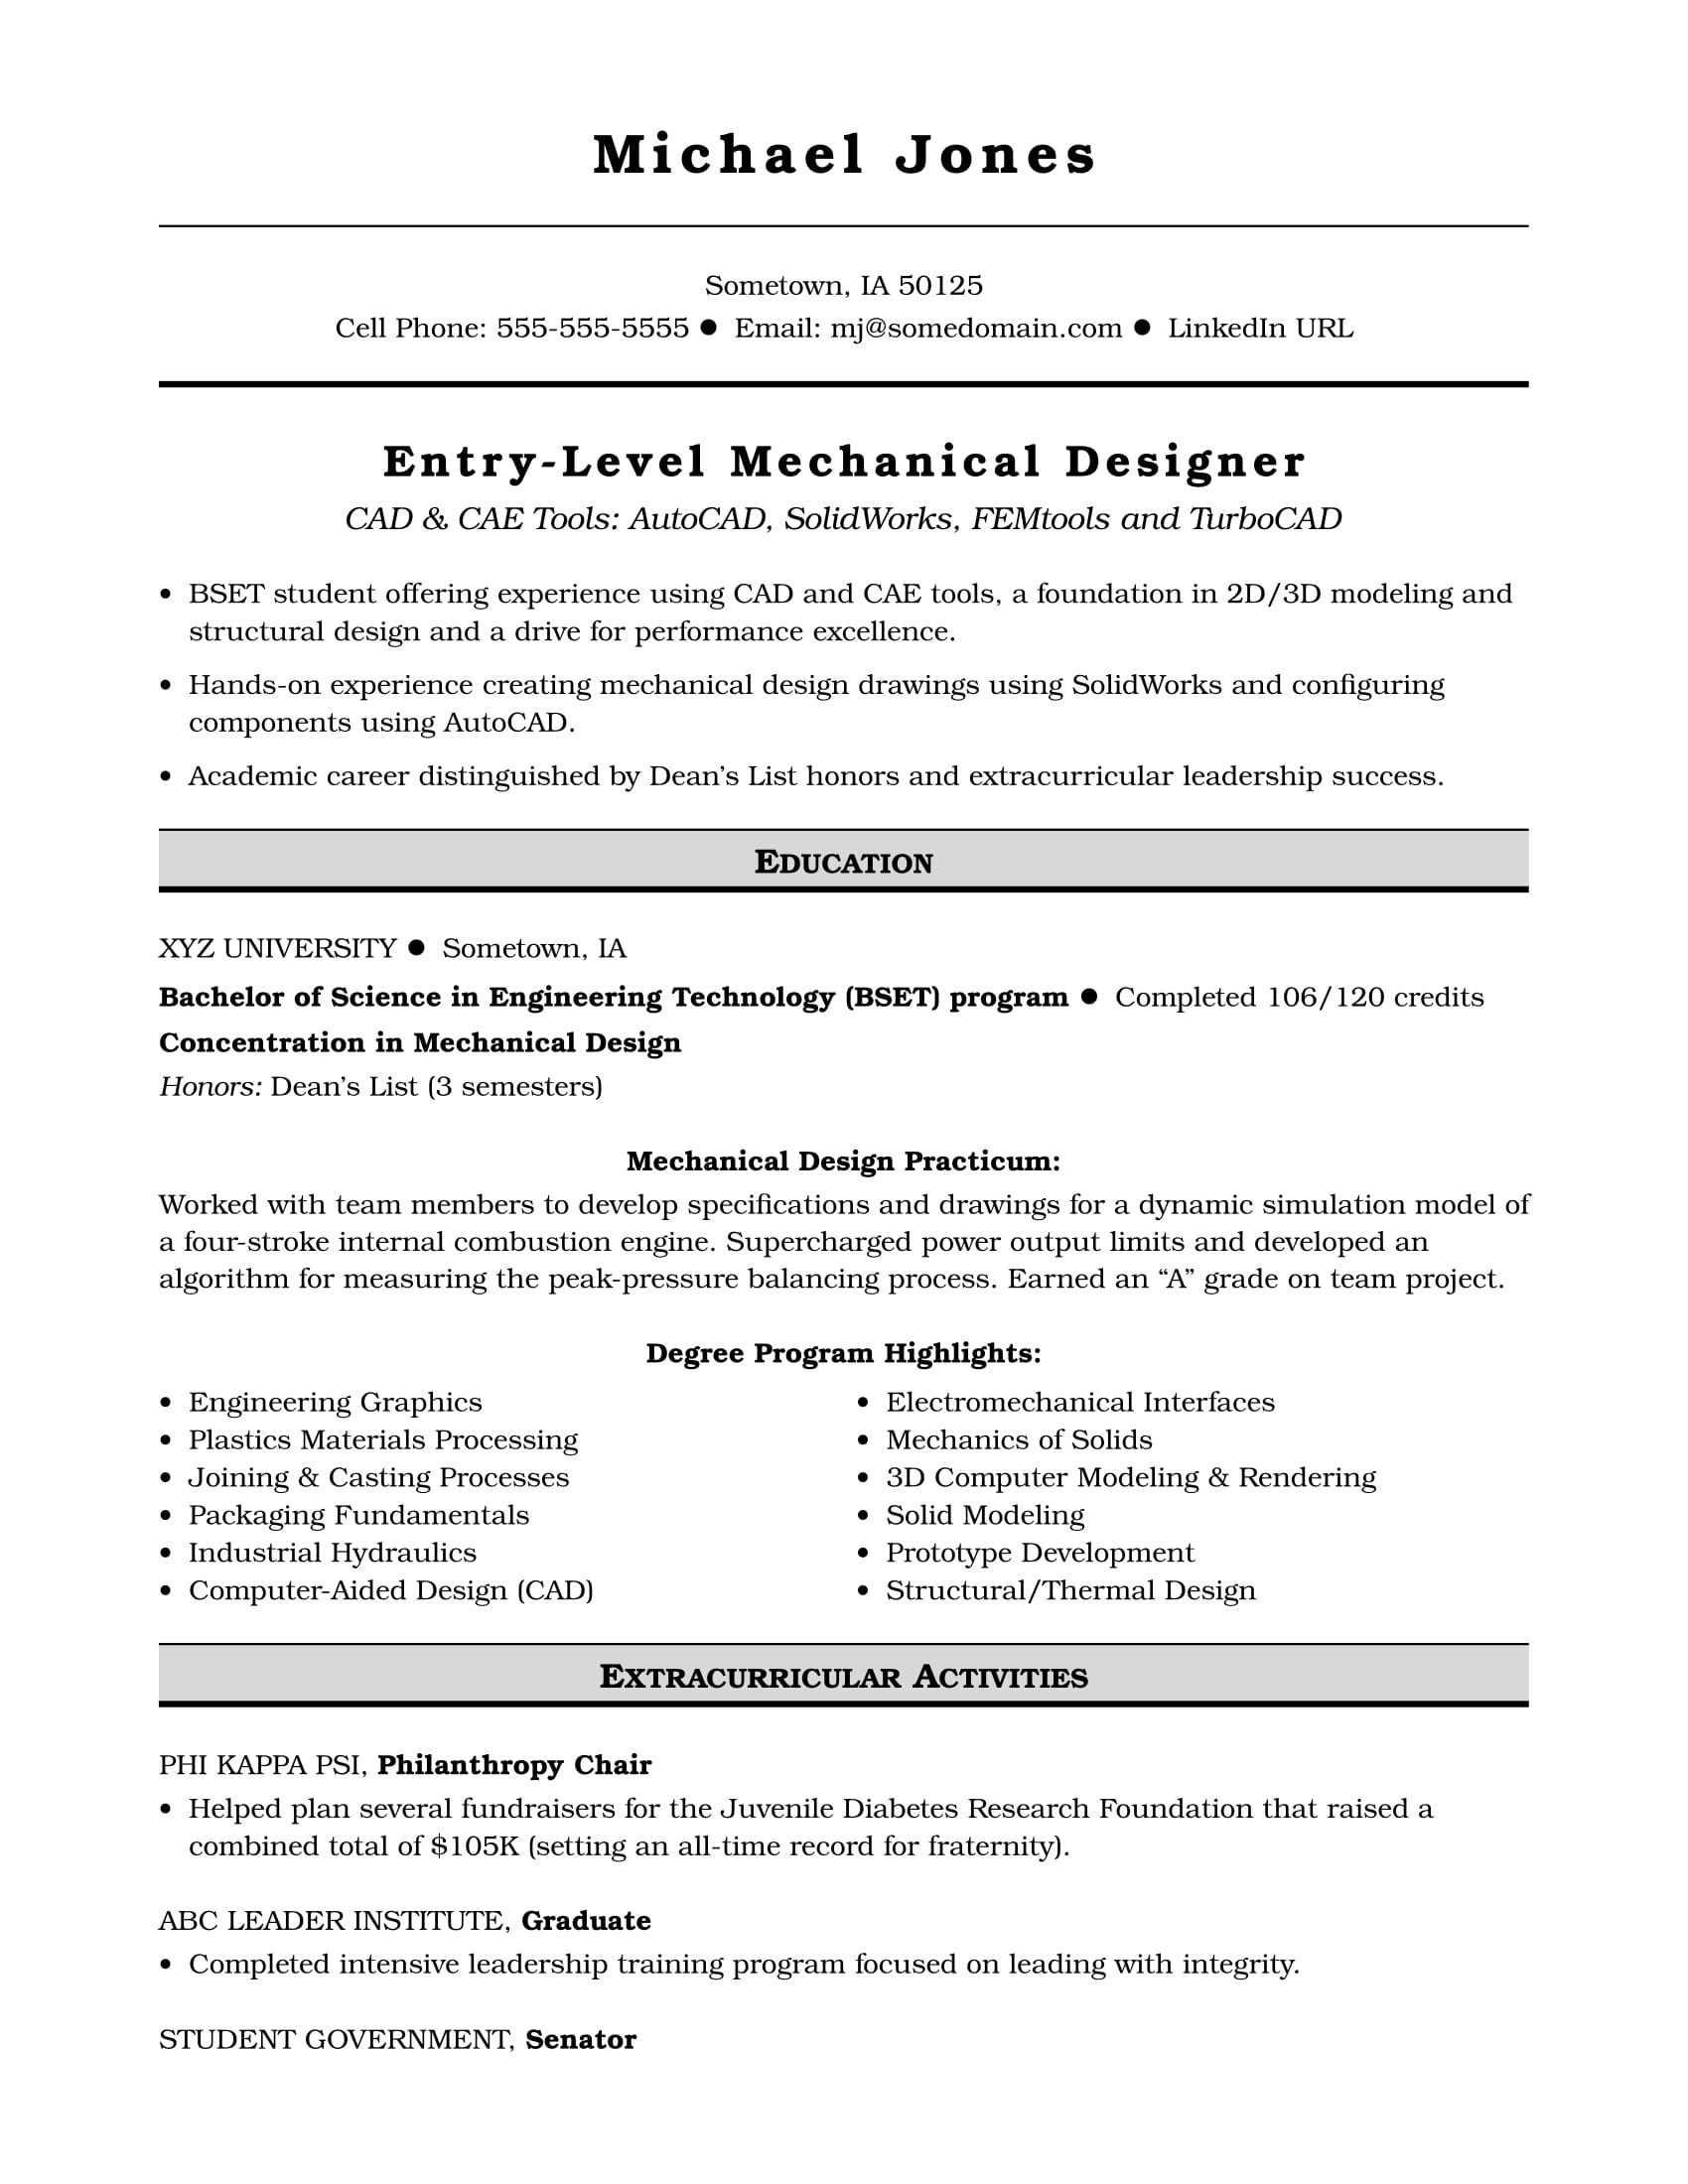 Sample Resume for Entry Level Product Engineer Sample Resume for An Entry-level Mechanical Designer Monster.com